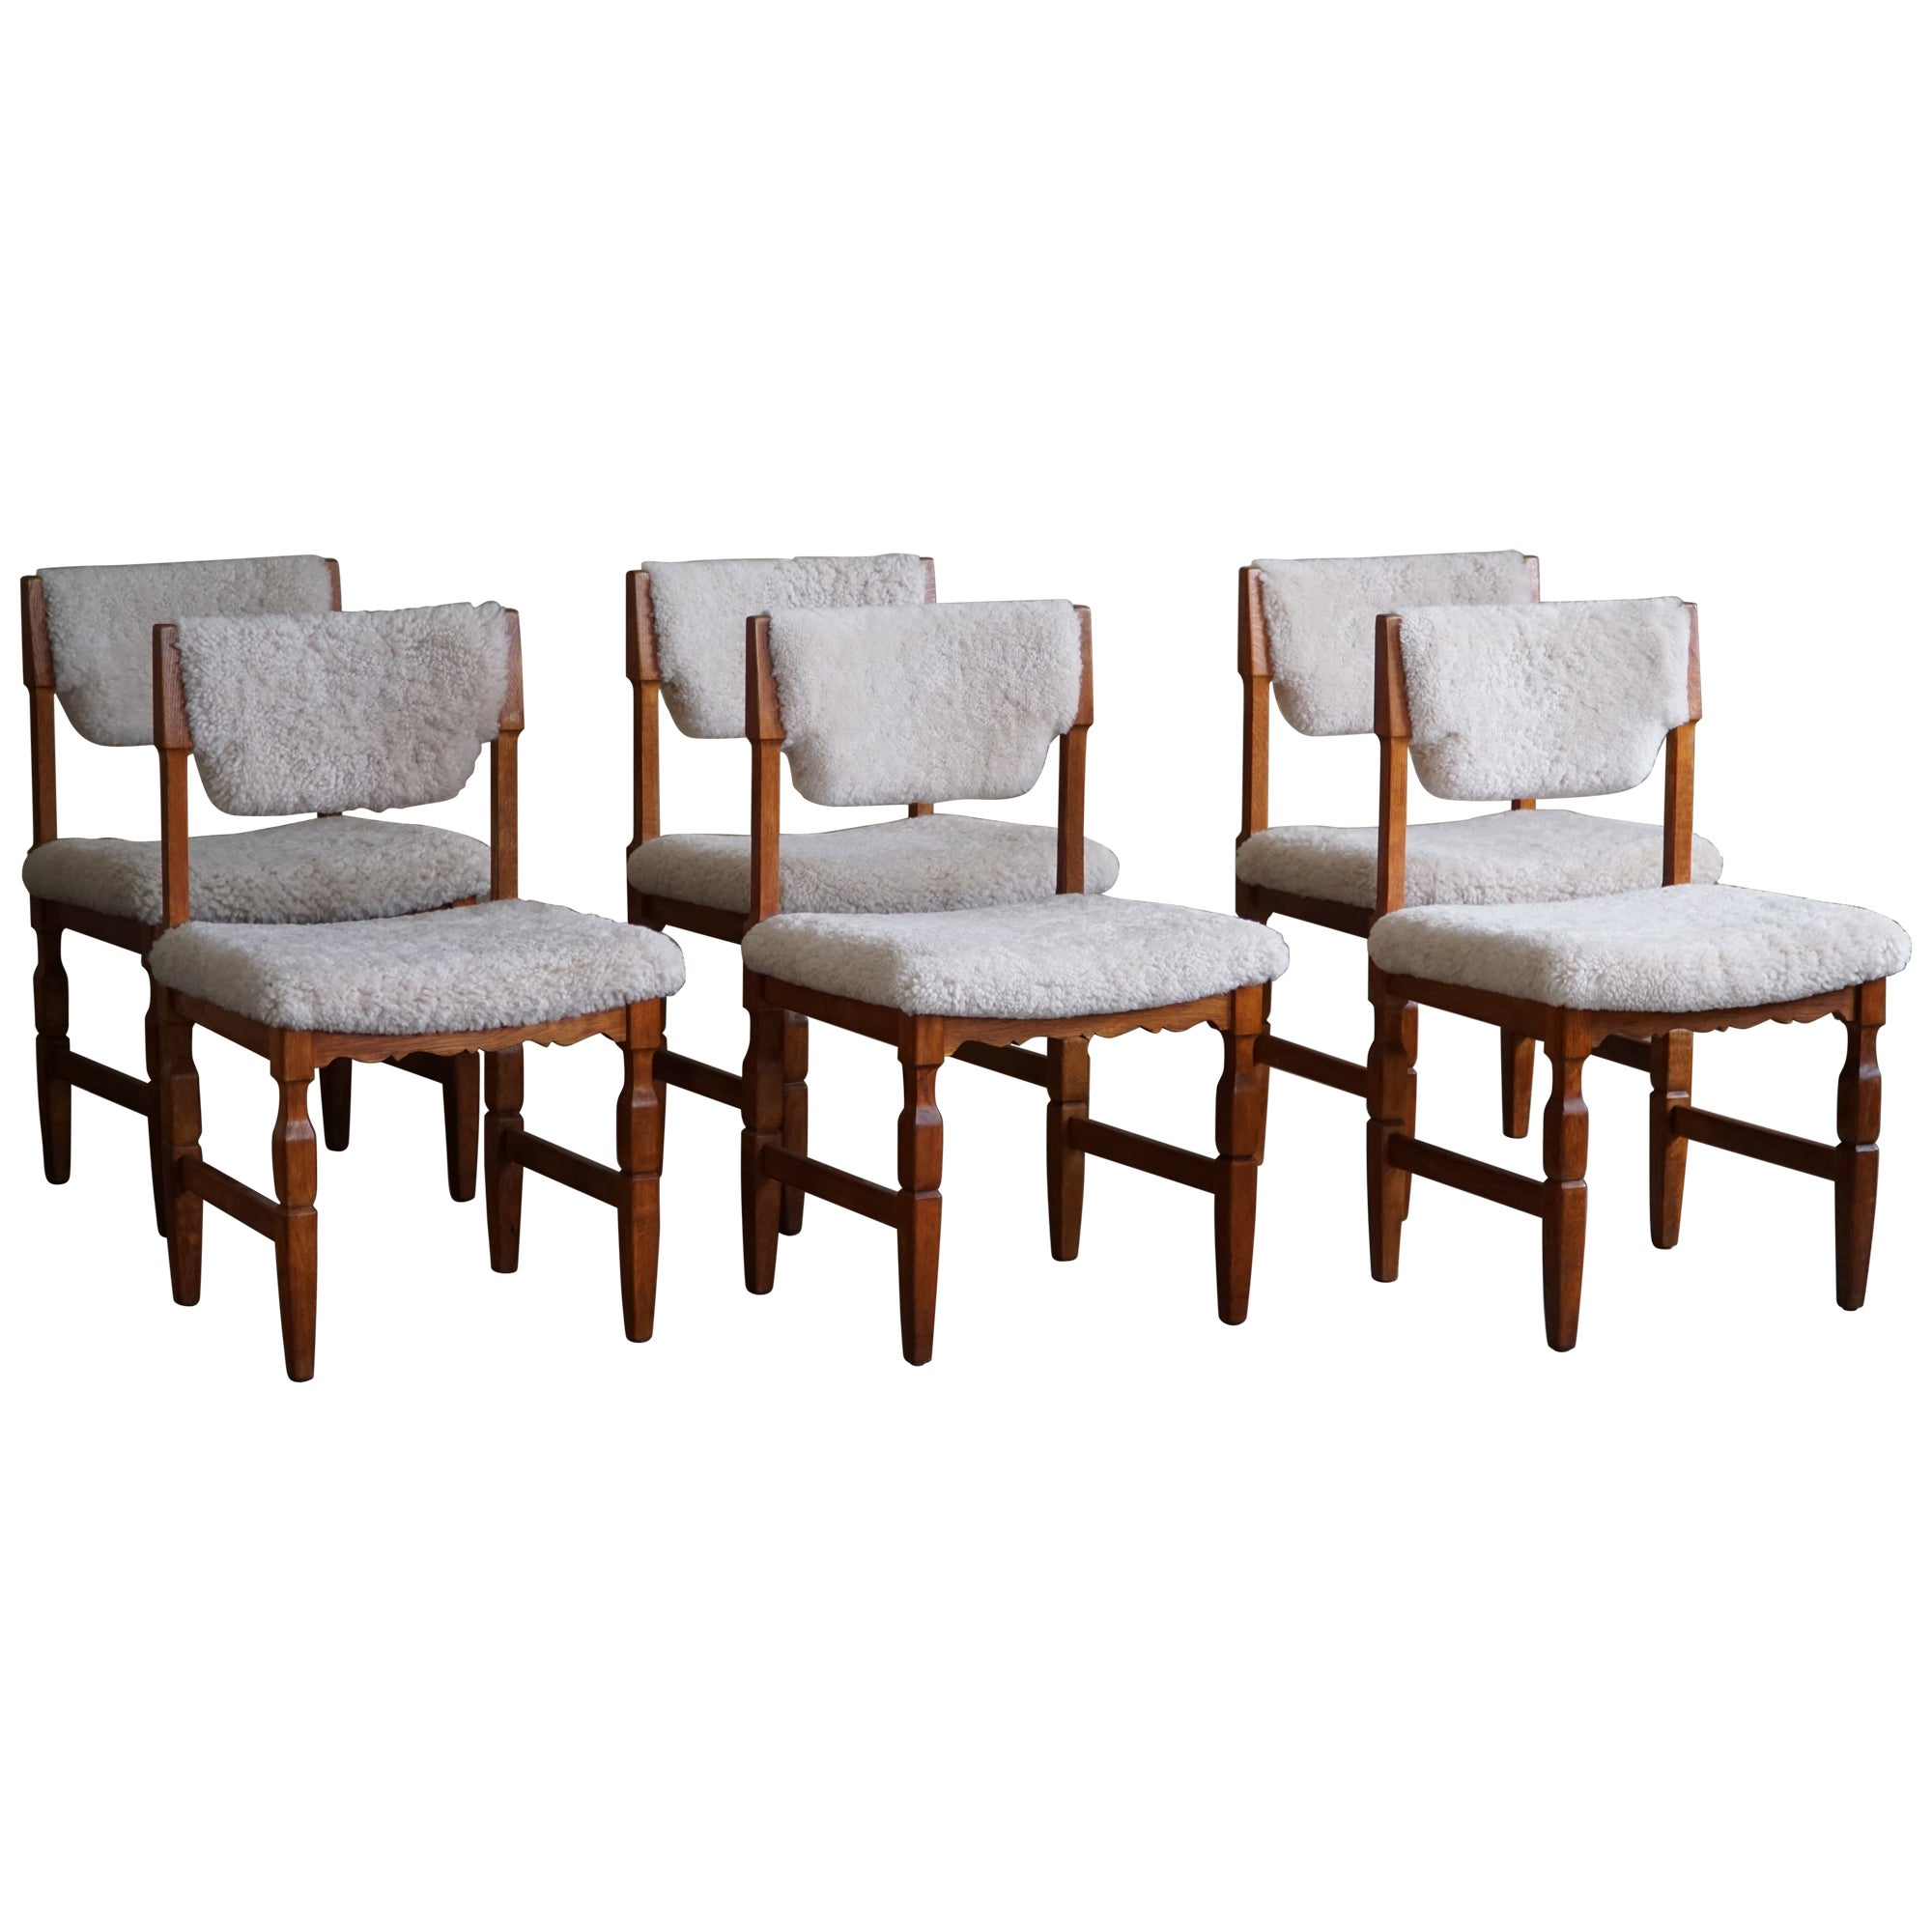 Set of 6 Dining Chairs in Oak & Lambswool, Danish Mid Century Modern, 1960s